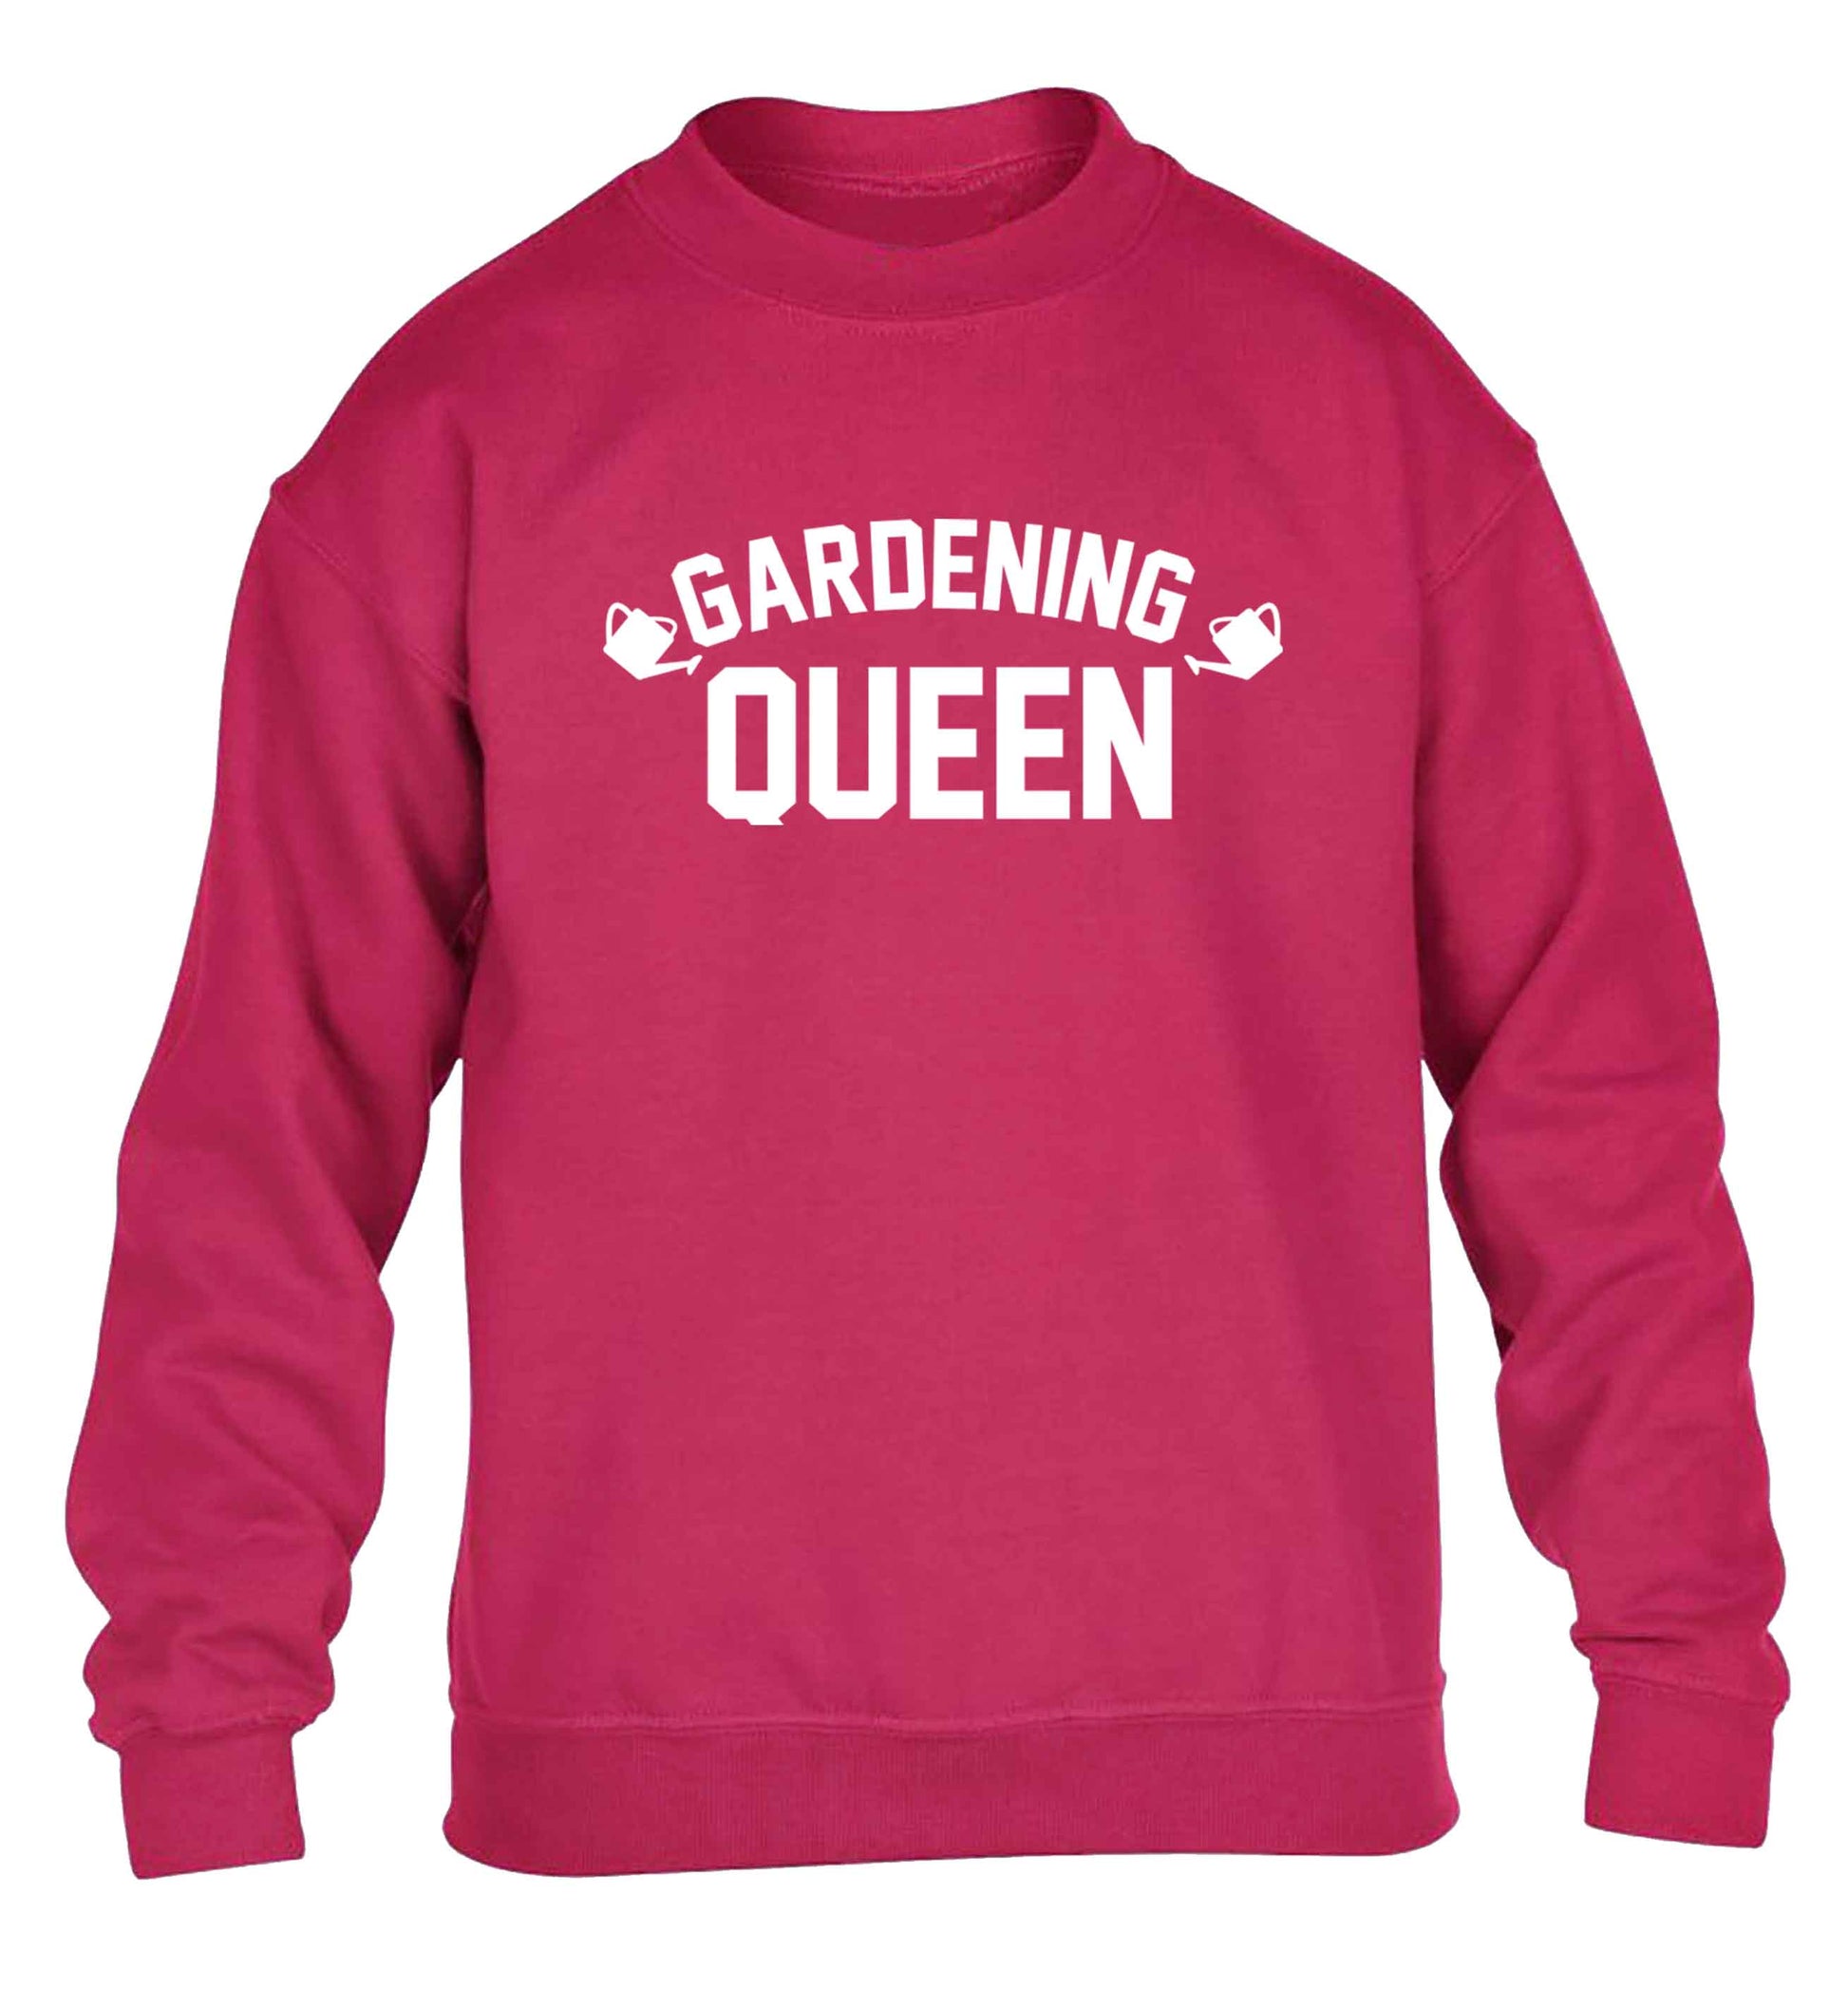 Gardening queen children's pink sweater 12-13 Years